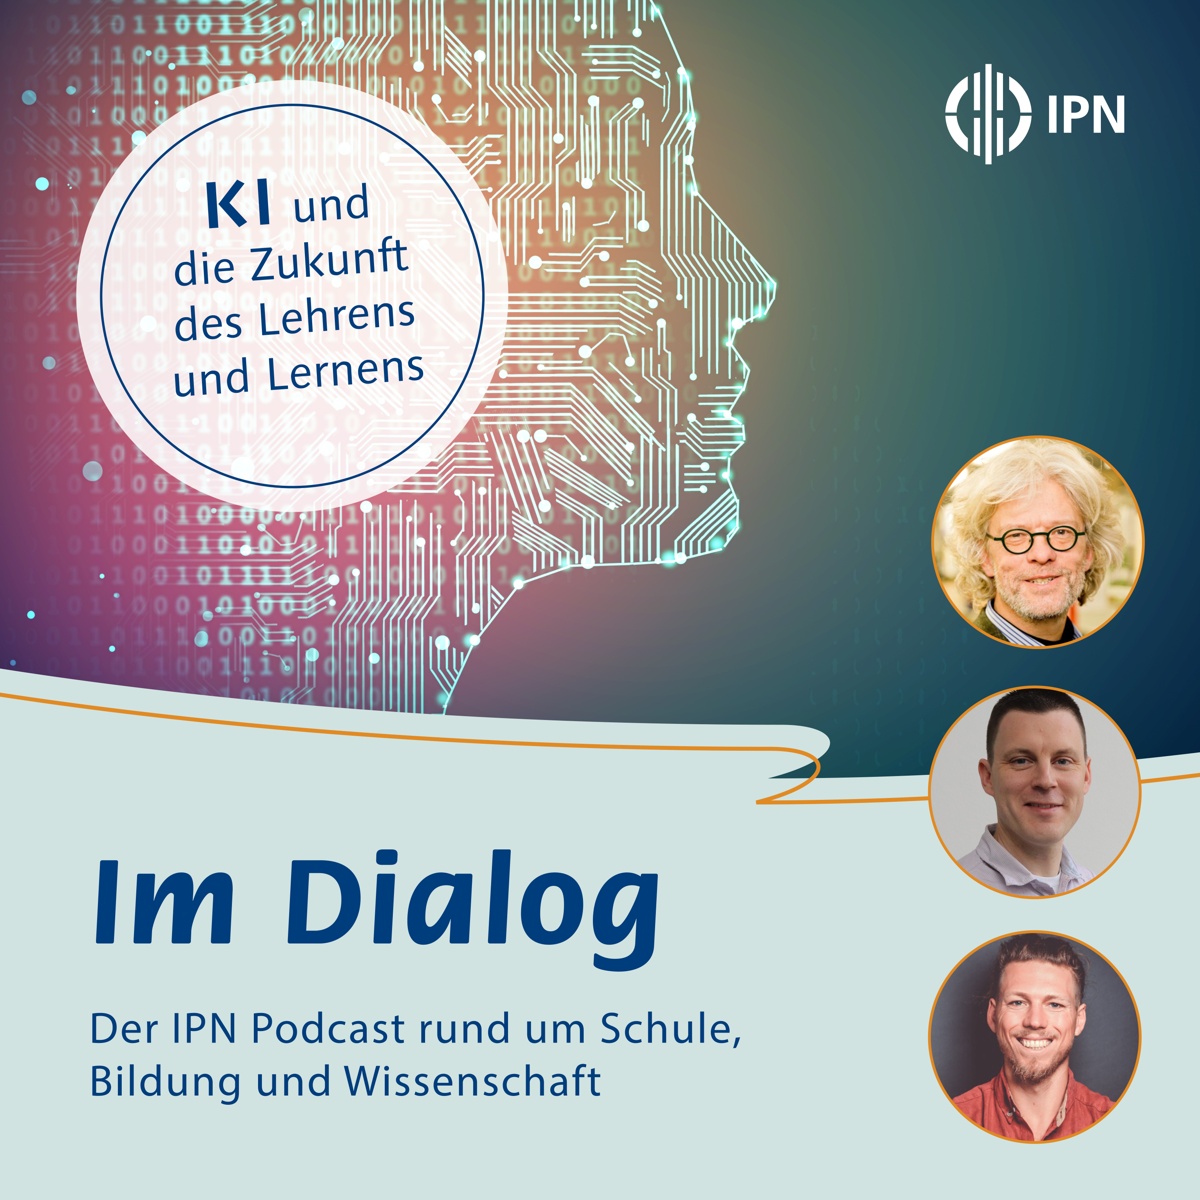 IPN Podcast "Im Dialog" mit Hendrik Haverkamp, Dr. Thorben Jansen und Prof. Dr. Detmar Meurers.